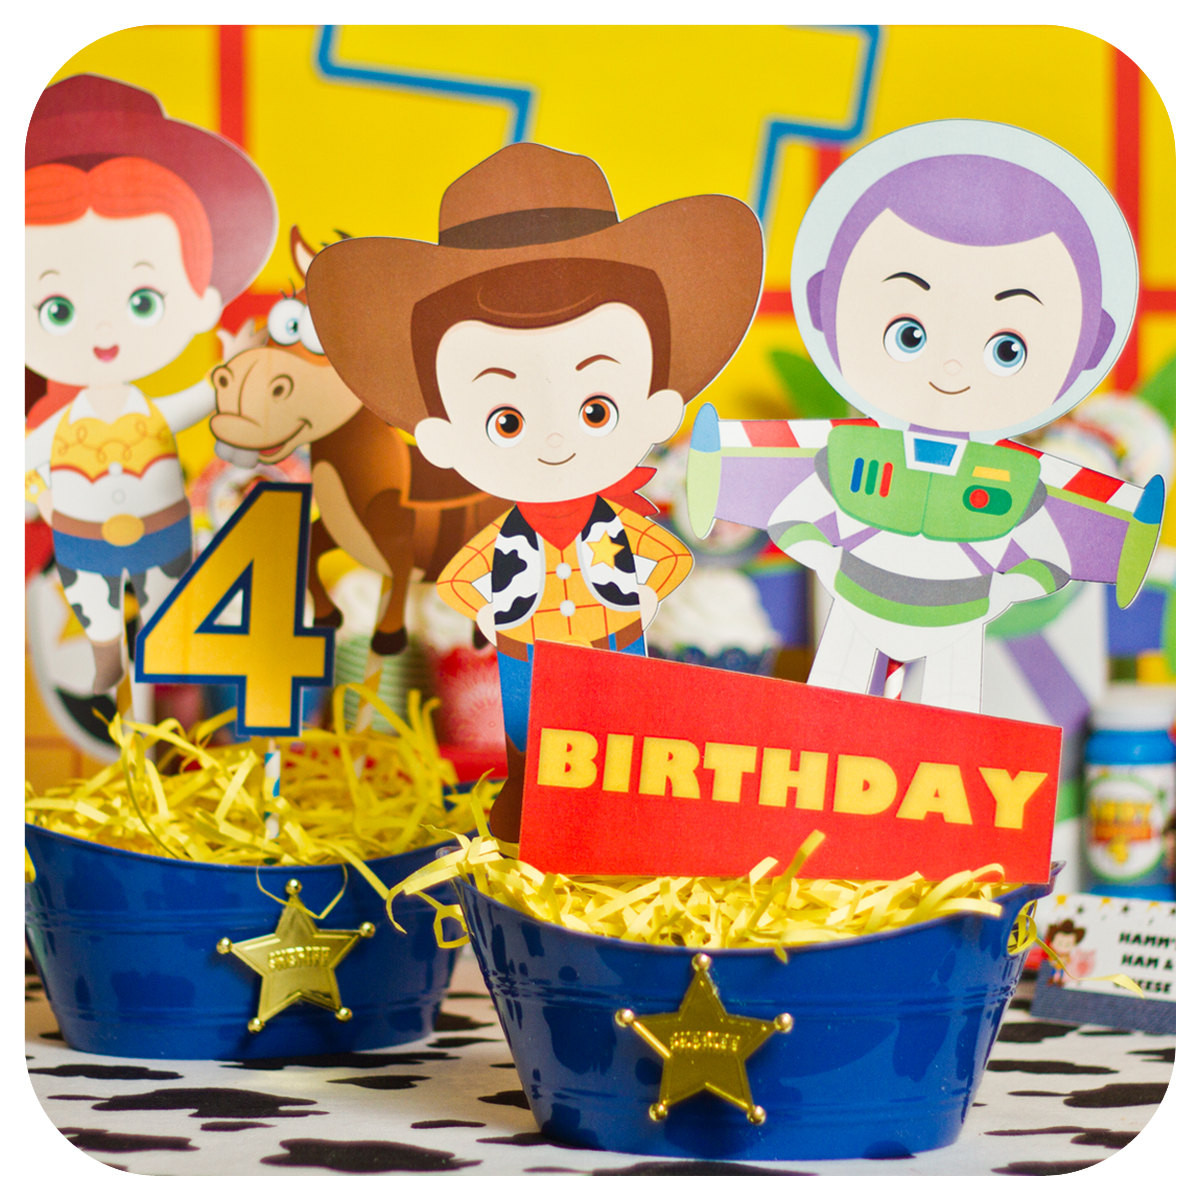 Toy Story Birthday Decorations
 Toy Story Toy Story Party Toy Story Birthday Party Toy